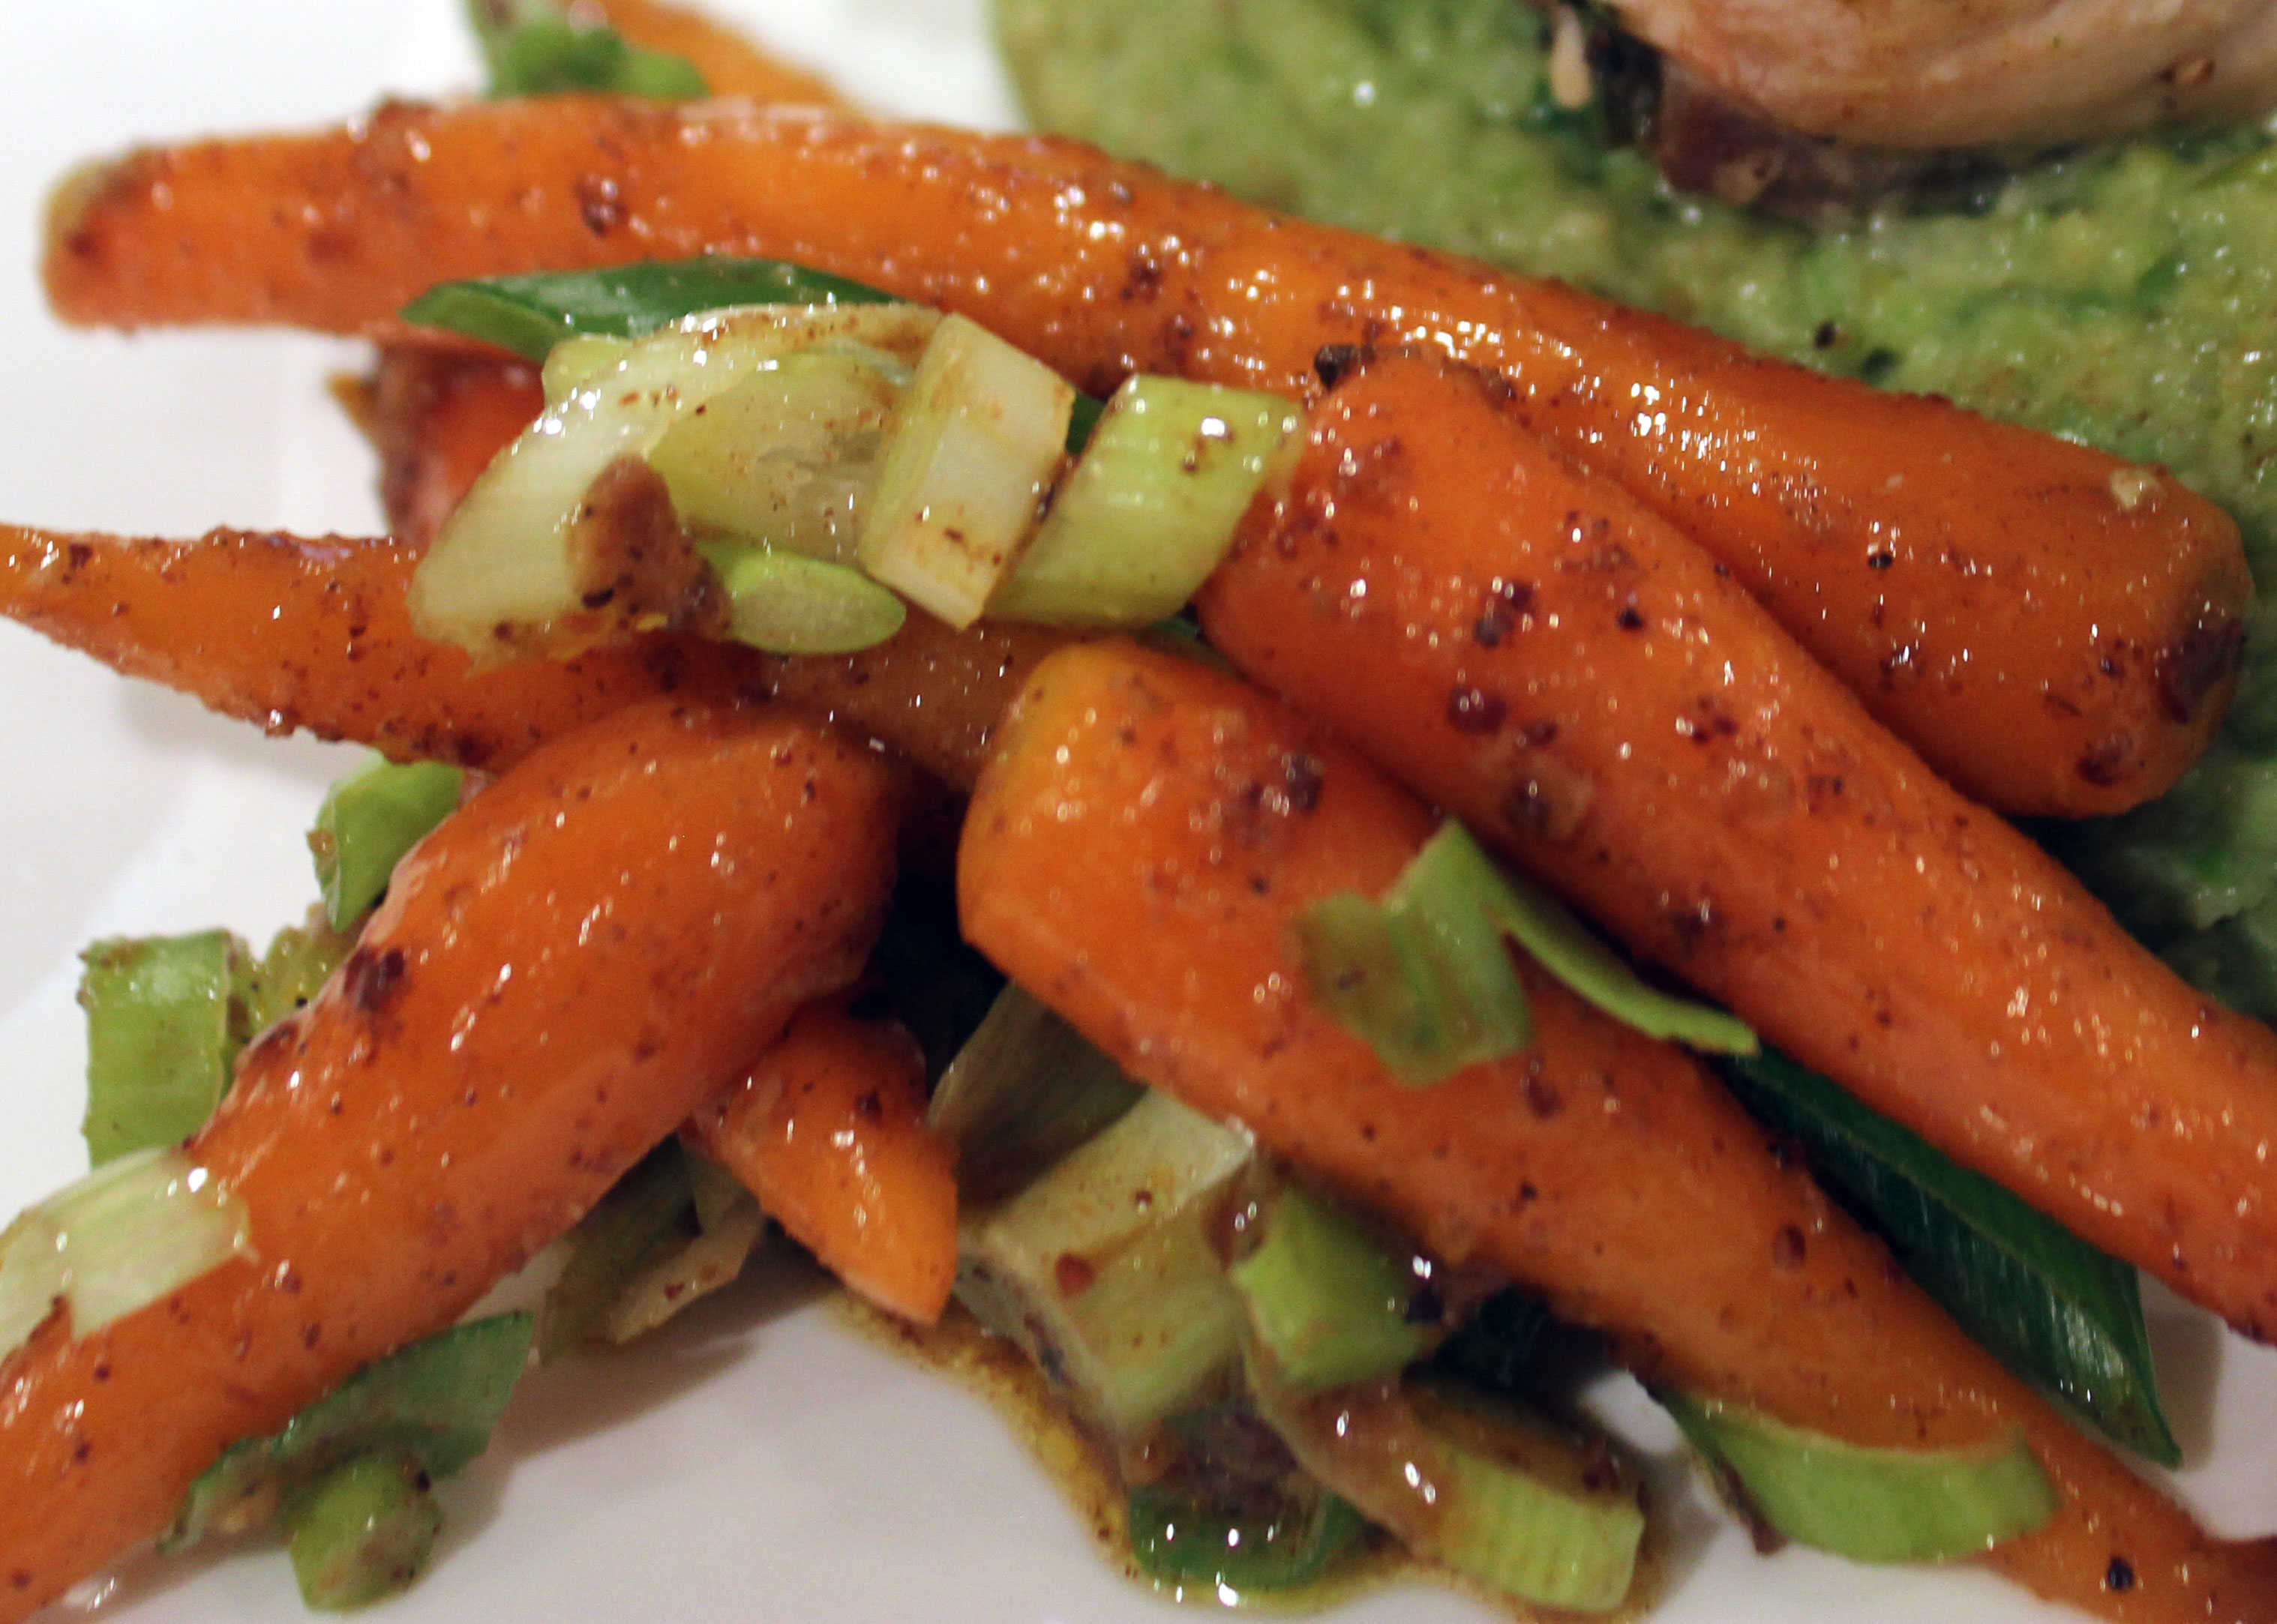 TBT Recipe: Roasted Orange Spiced Carrots